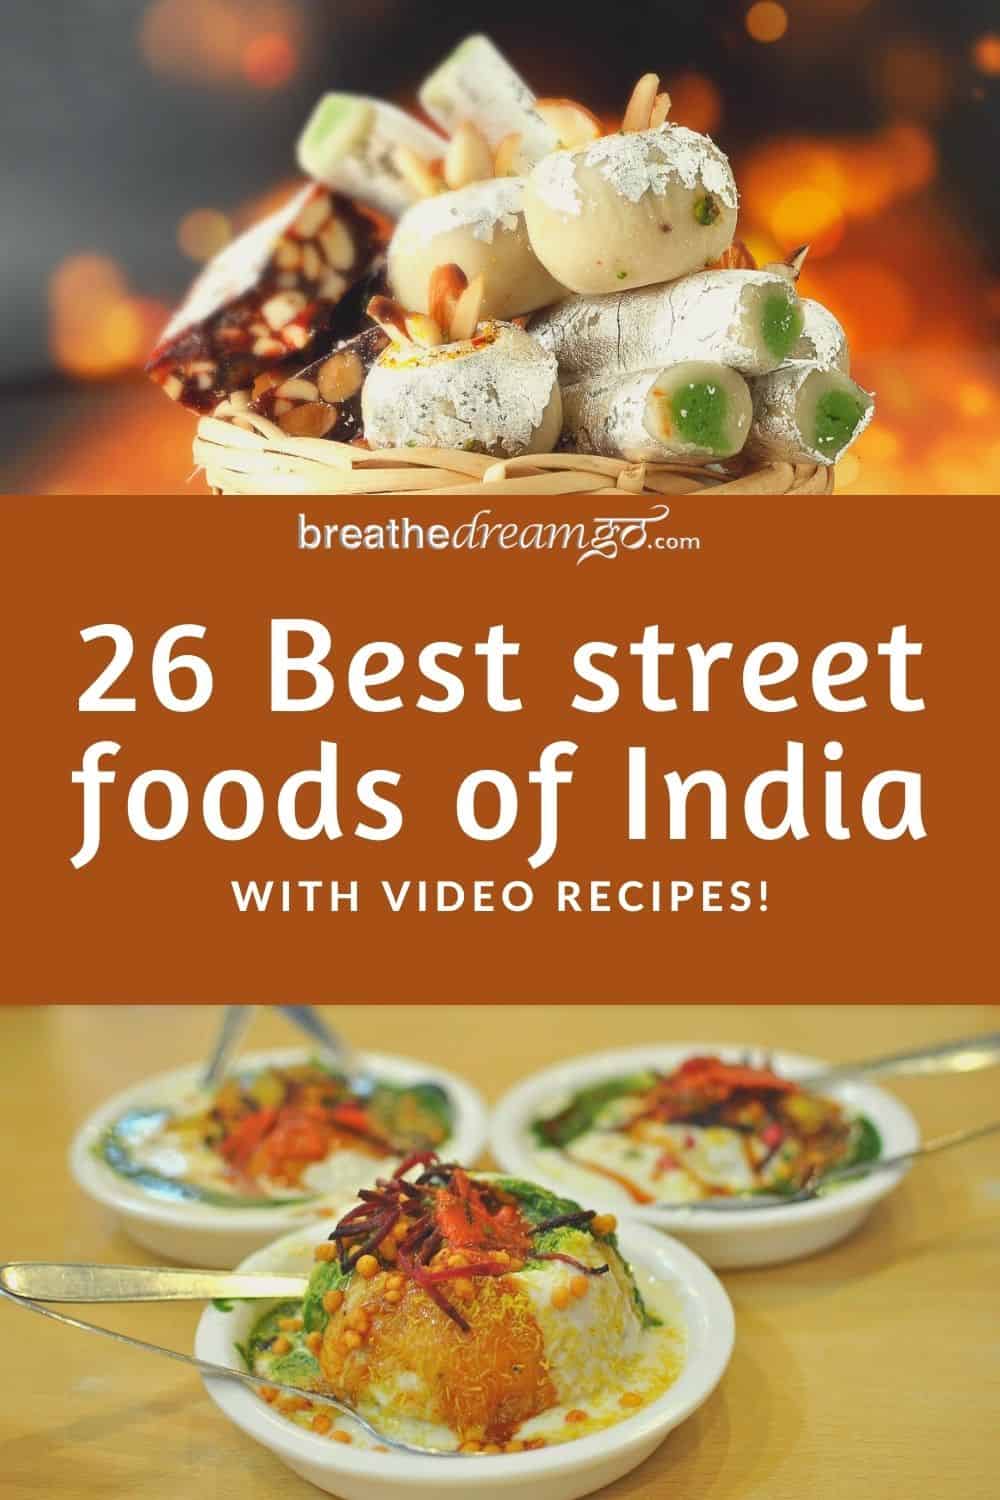 Best street foods of India